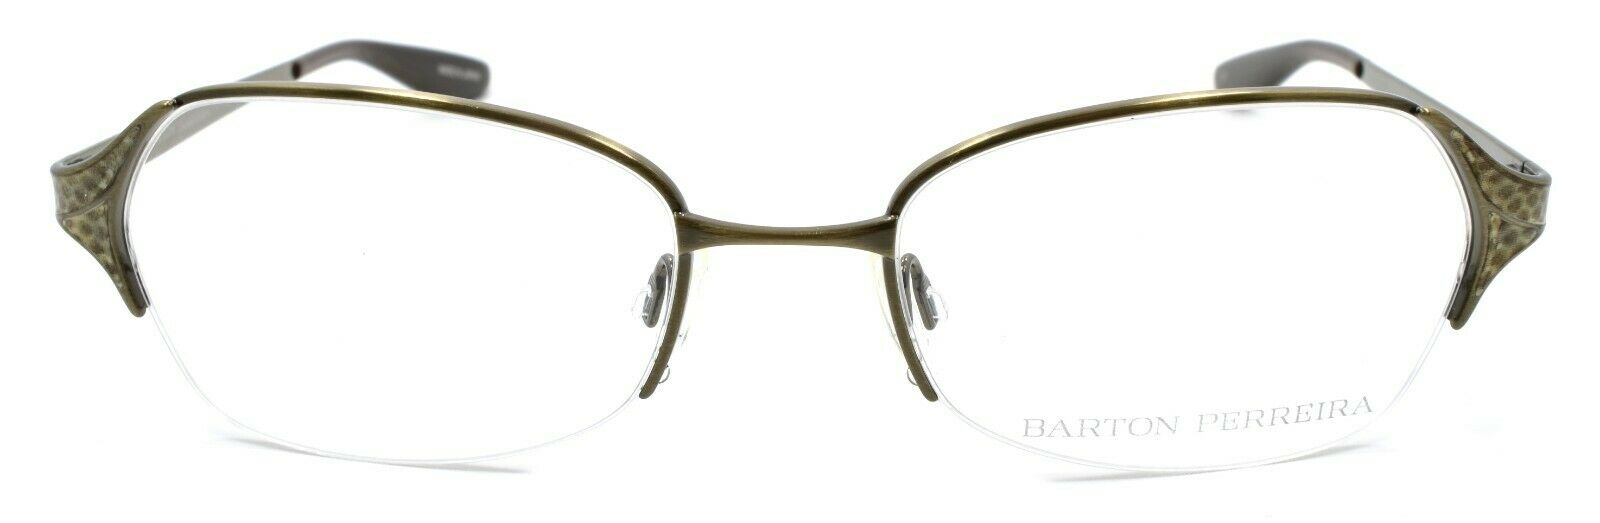 2-Barton Perreira Valera Women's Eyeglasses 50-18-135 Sahara Snake / Antique Gold-672263039891-IKSpecs